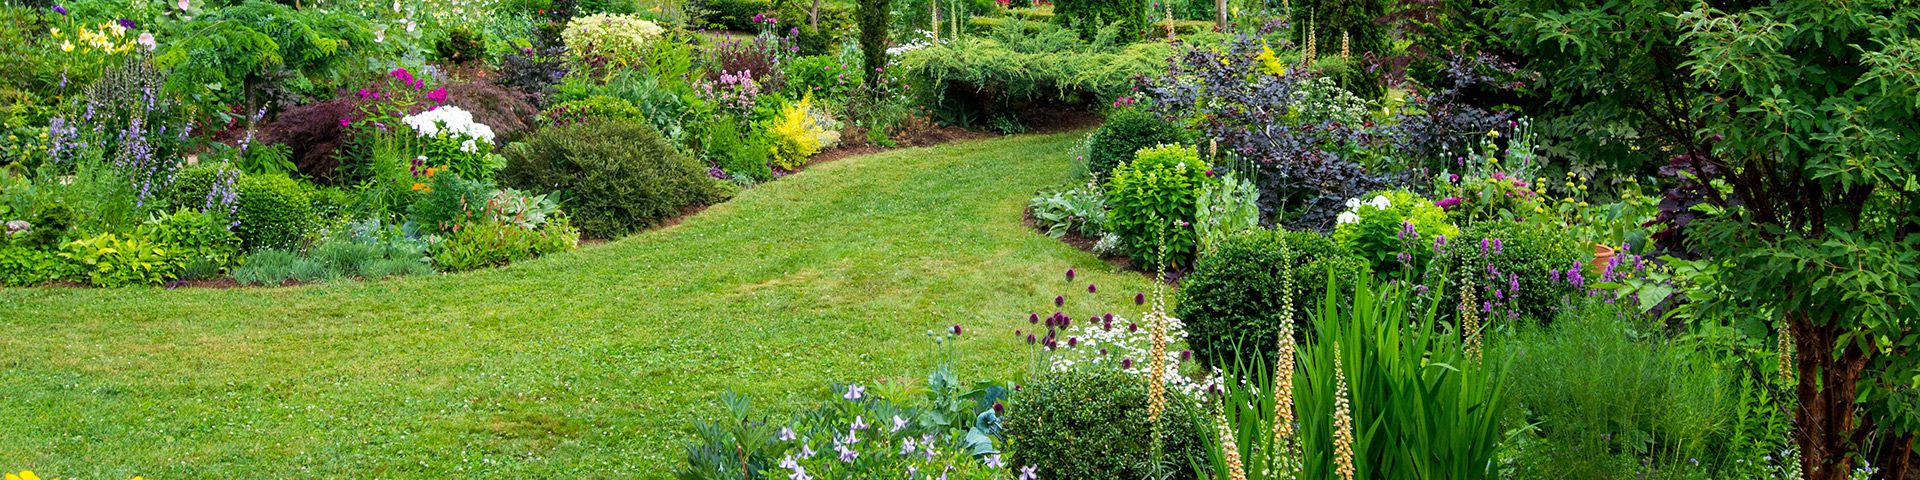 garden design category image